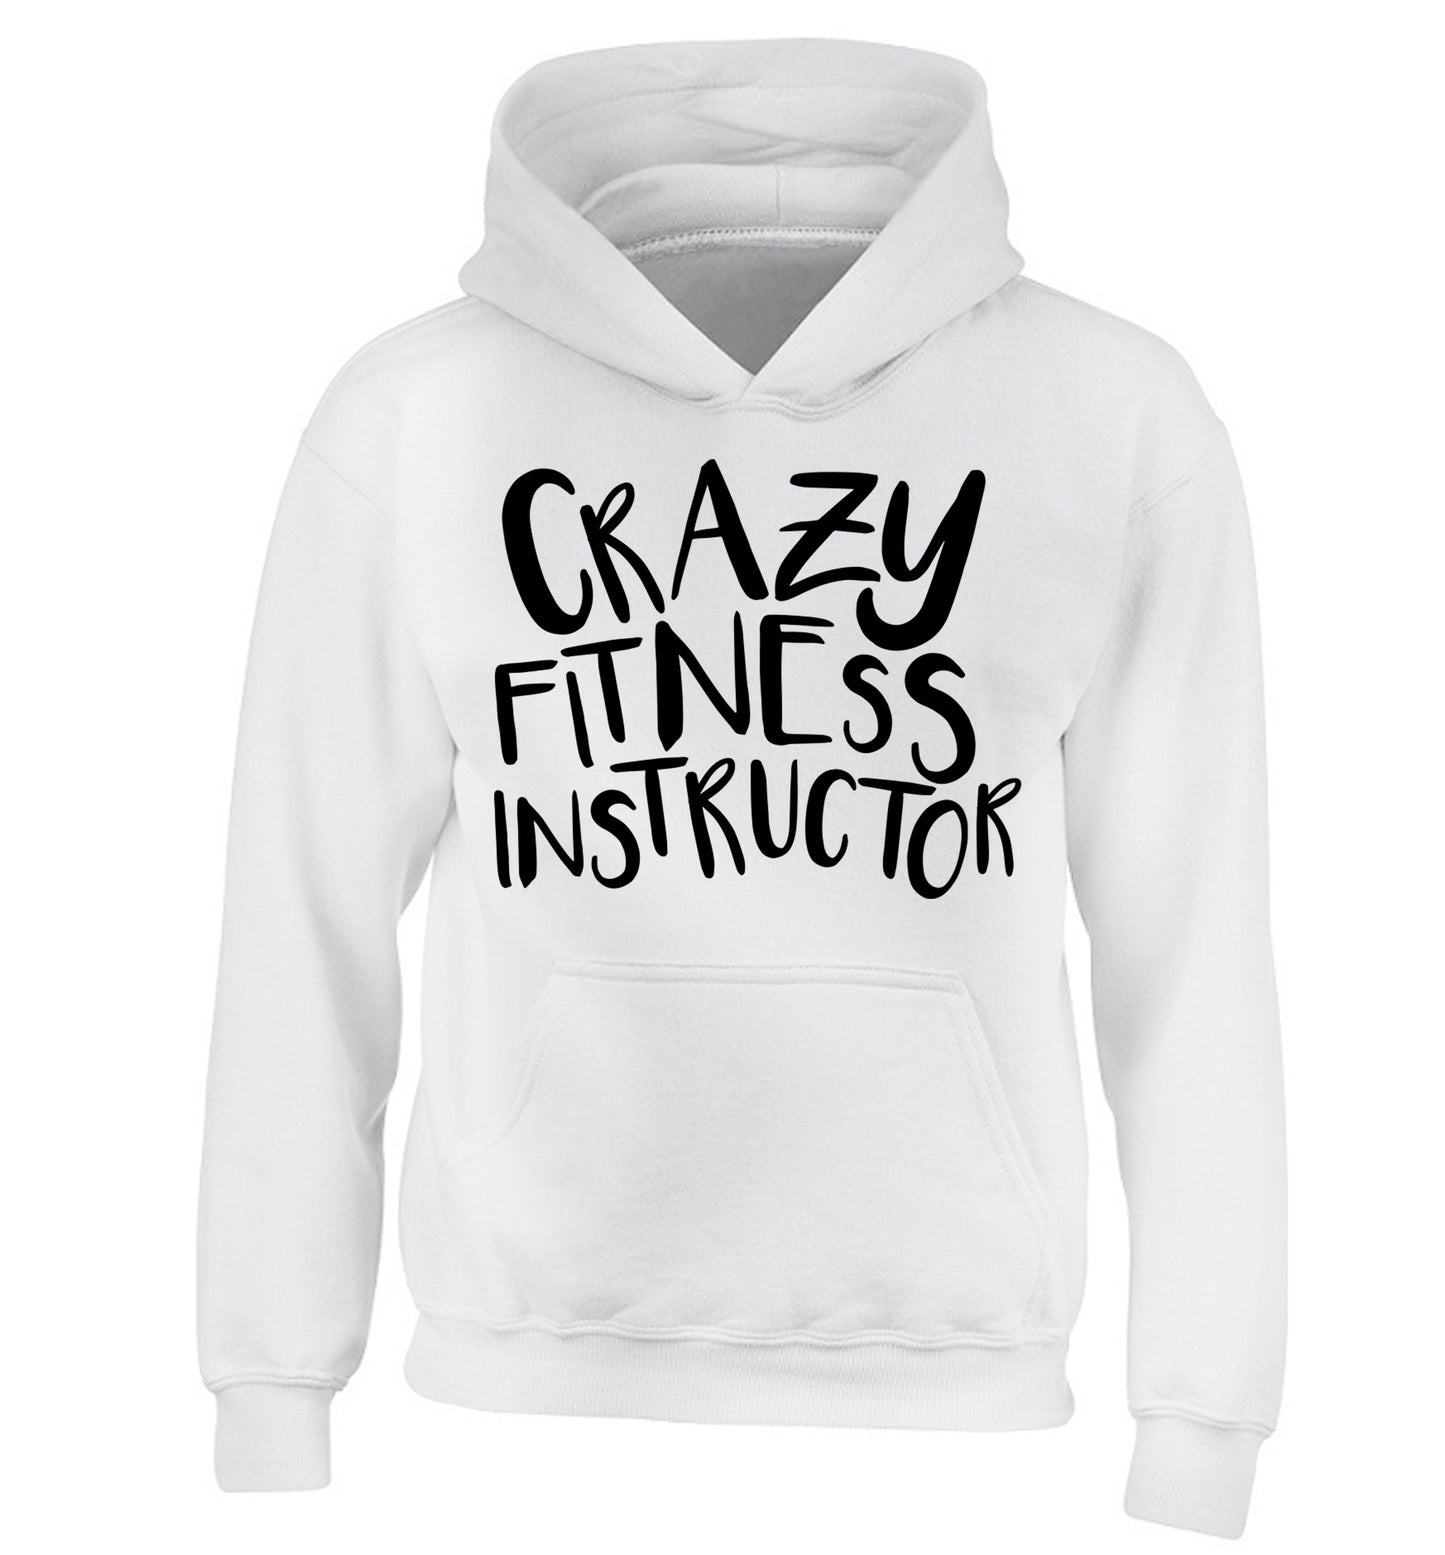 Crazy fitness instructor children's white hoodie 12-13 Years